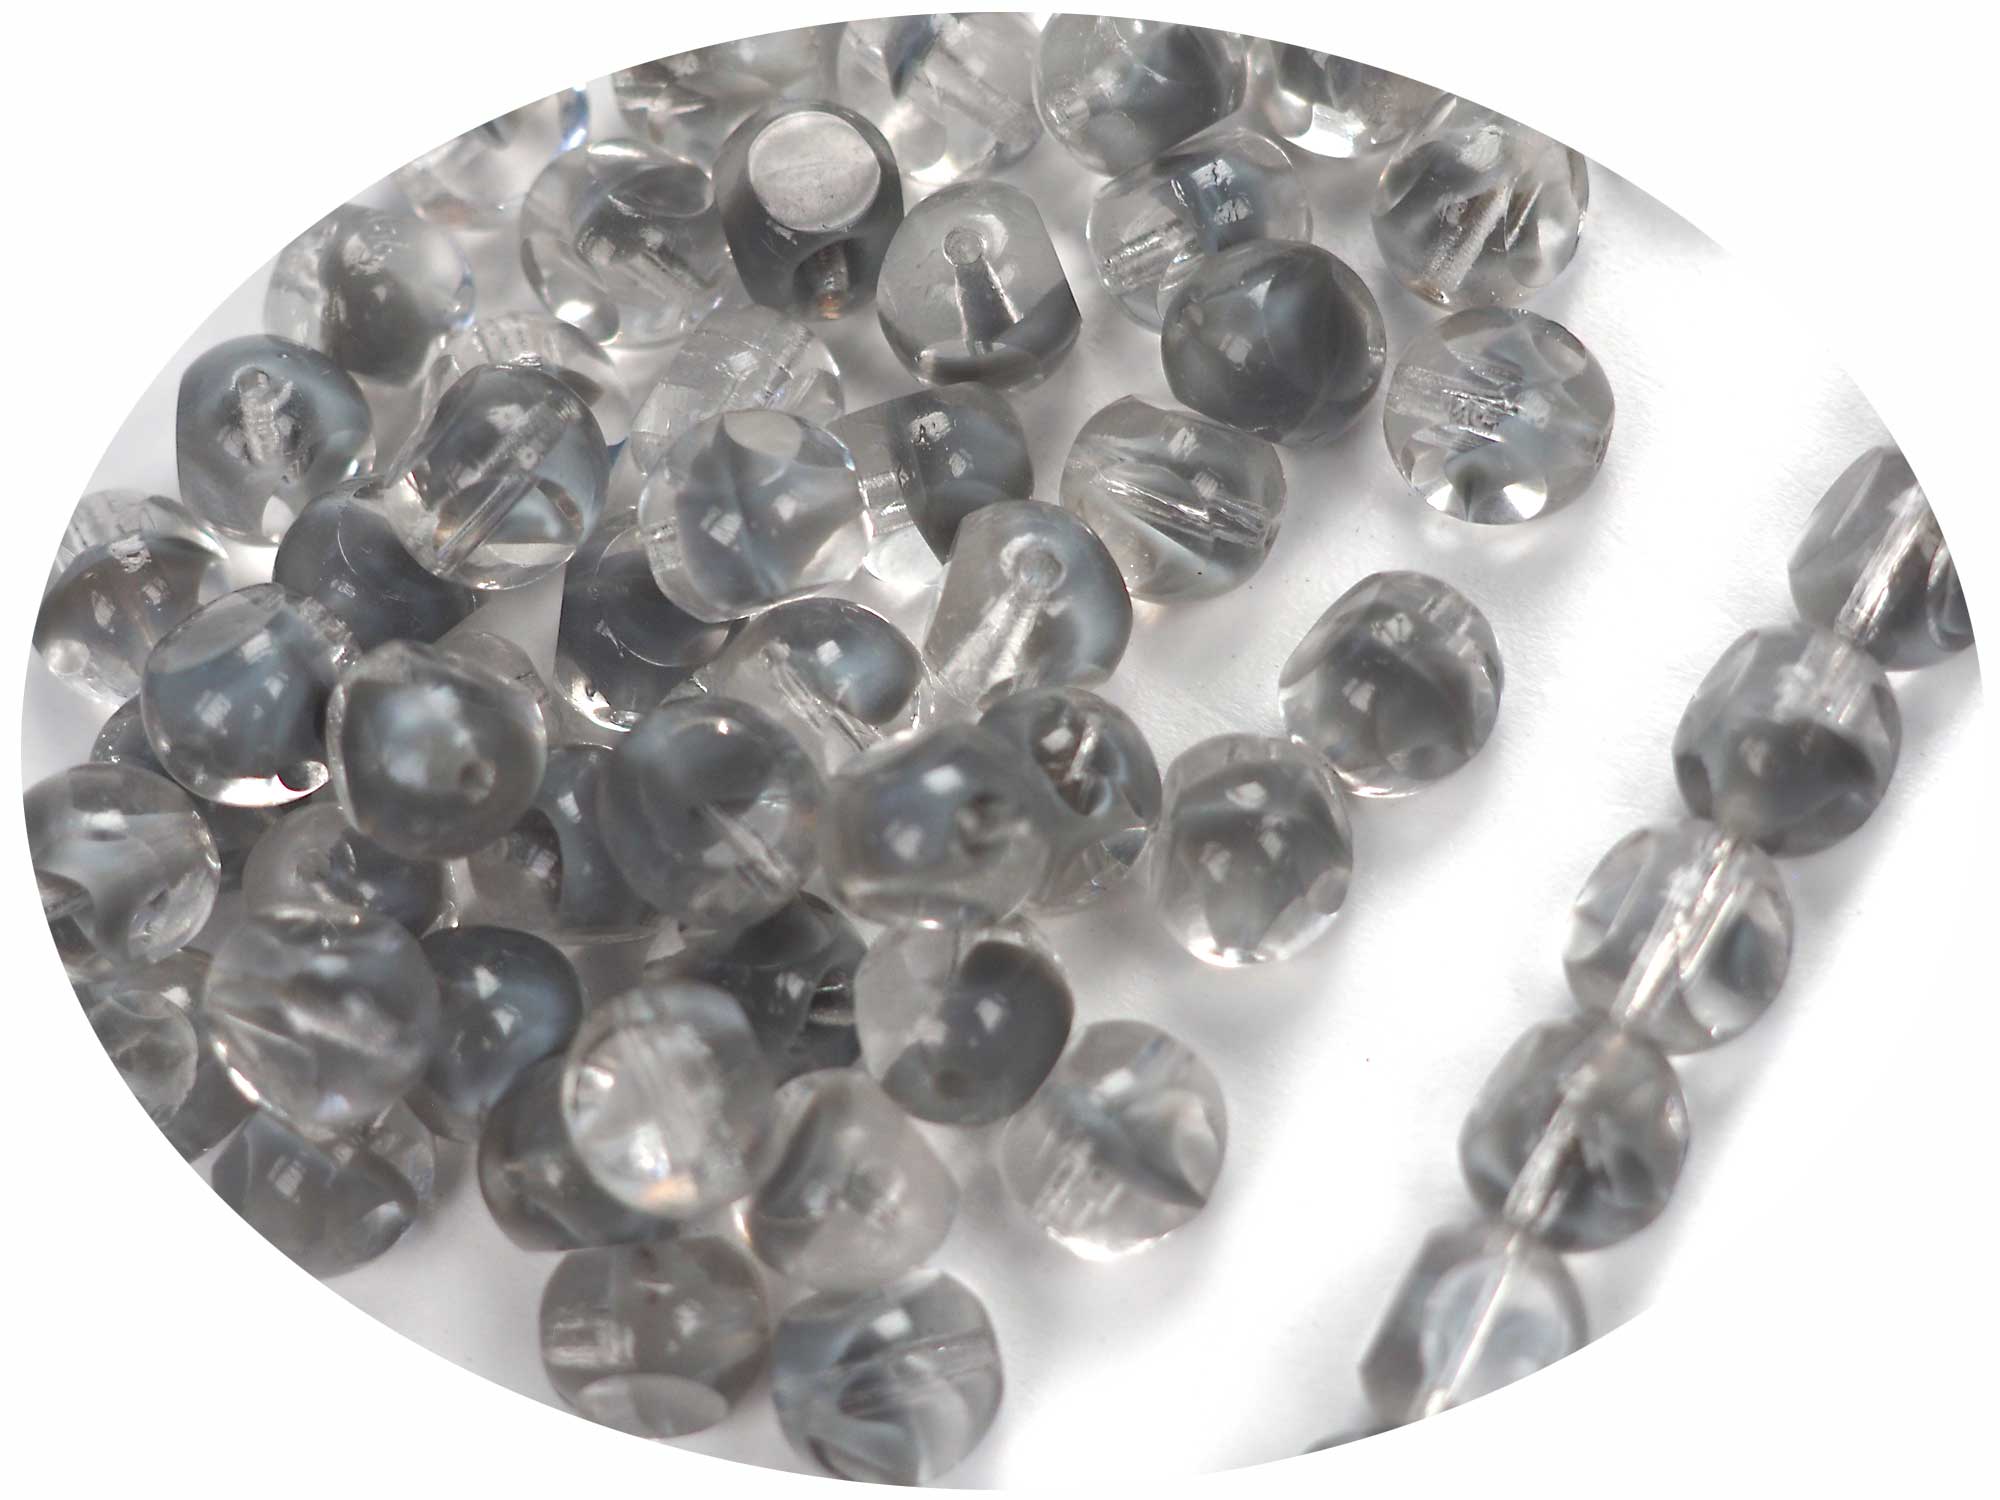 Czech Glass 3-Cut Round Window Beads (Soccer Ball Bead) Art. 151-19501 in size 8mm, Crystal Grey Givre, 36pcs, P879